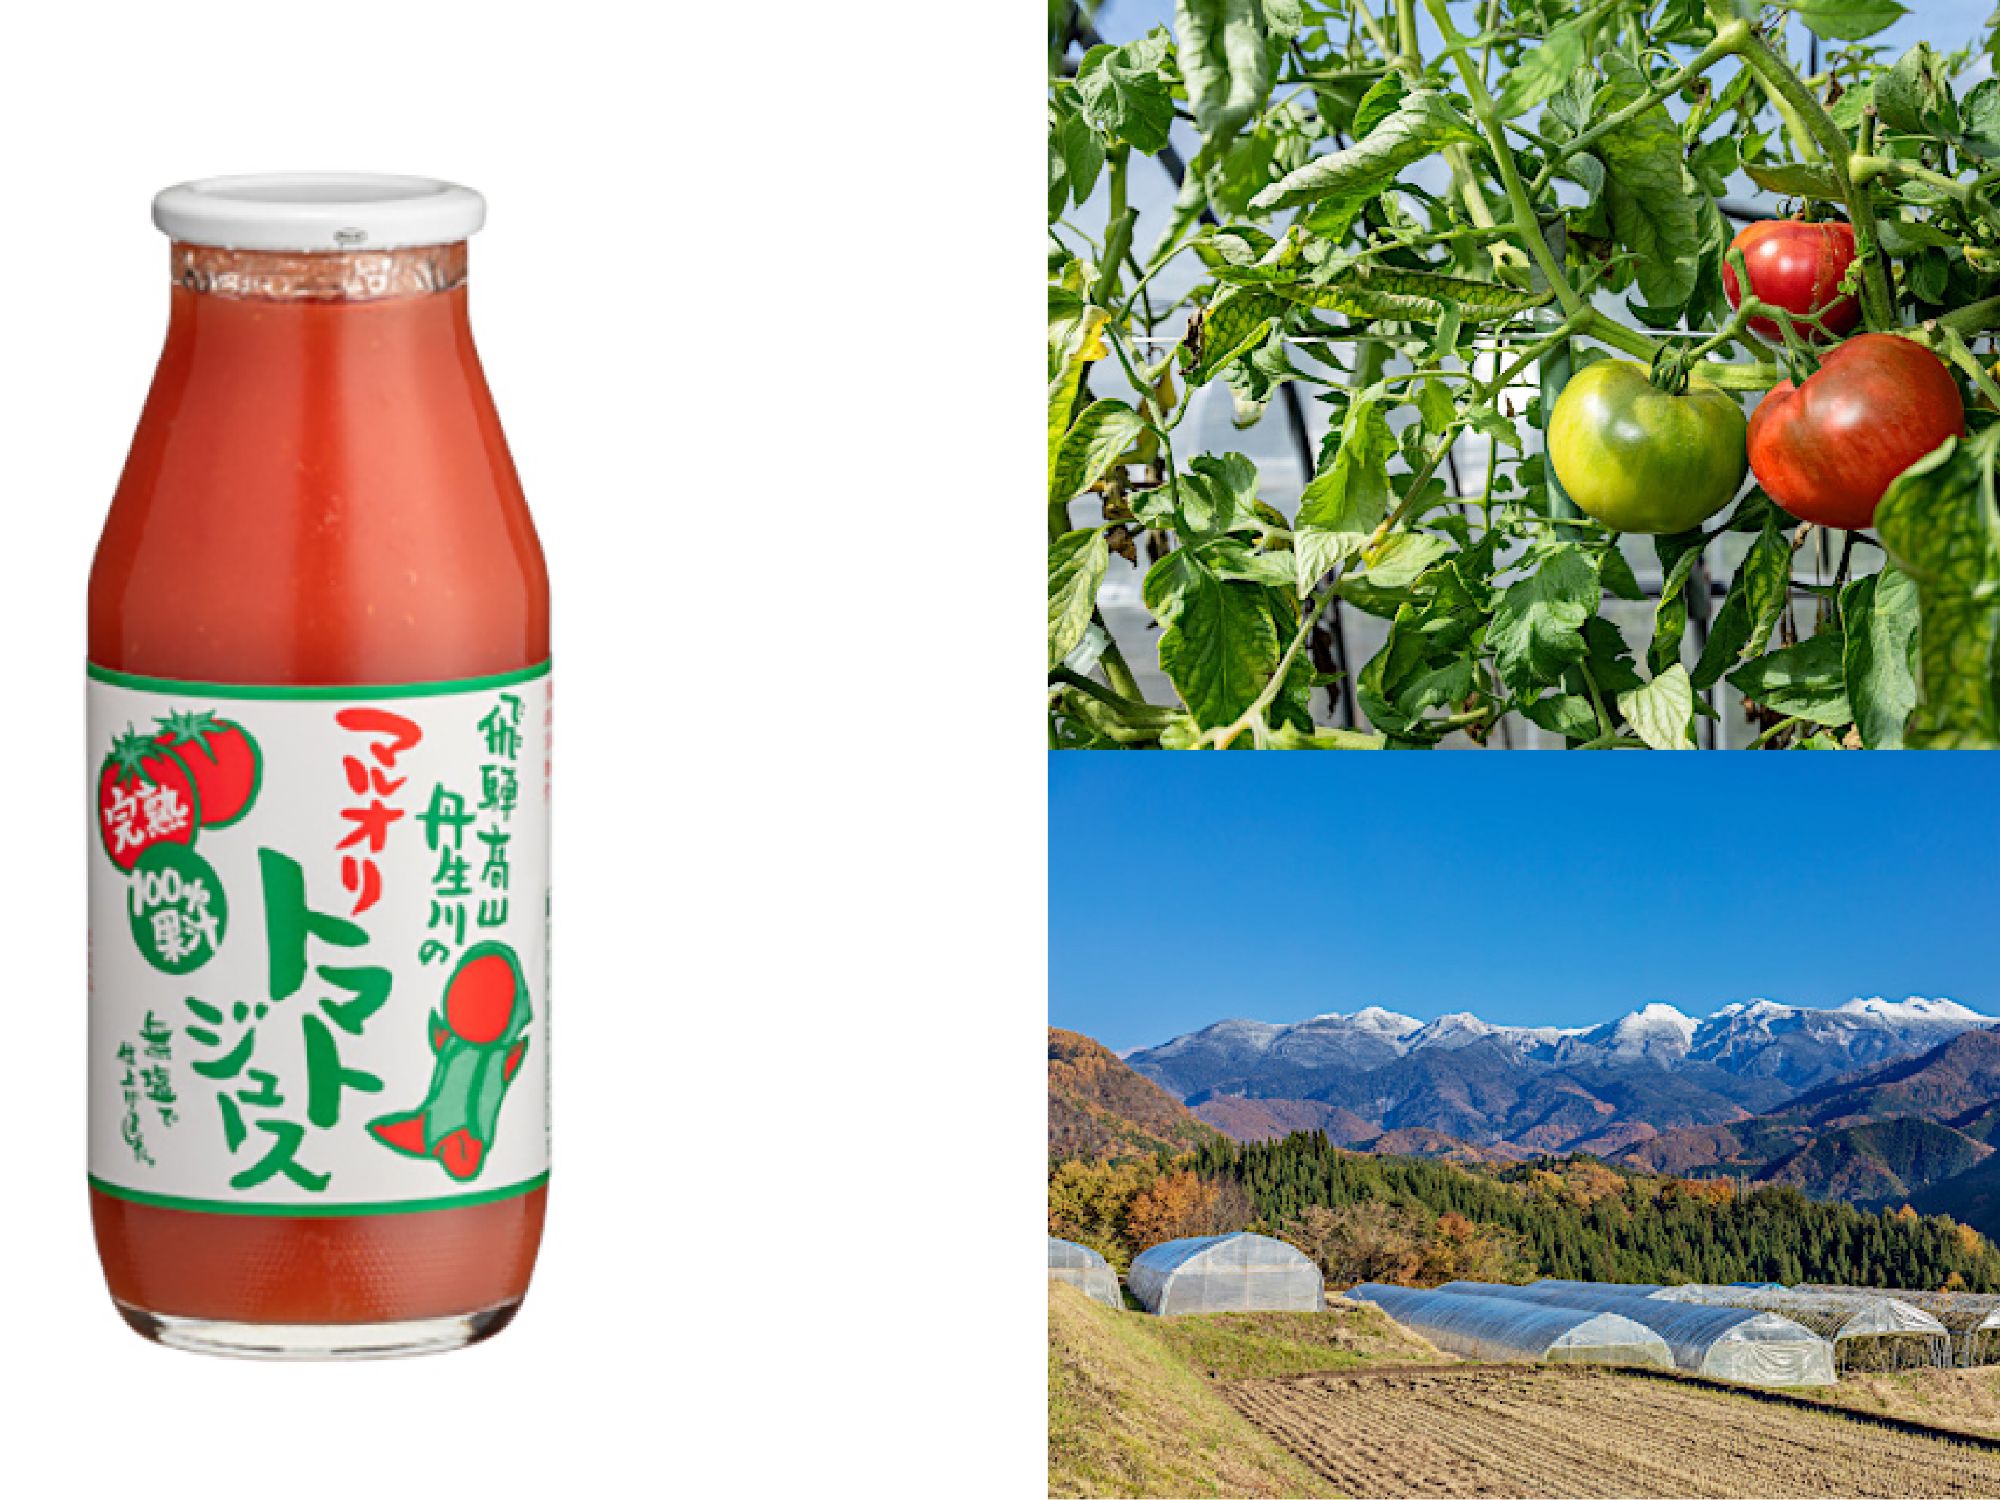 Takayama Tomato Juice